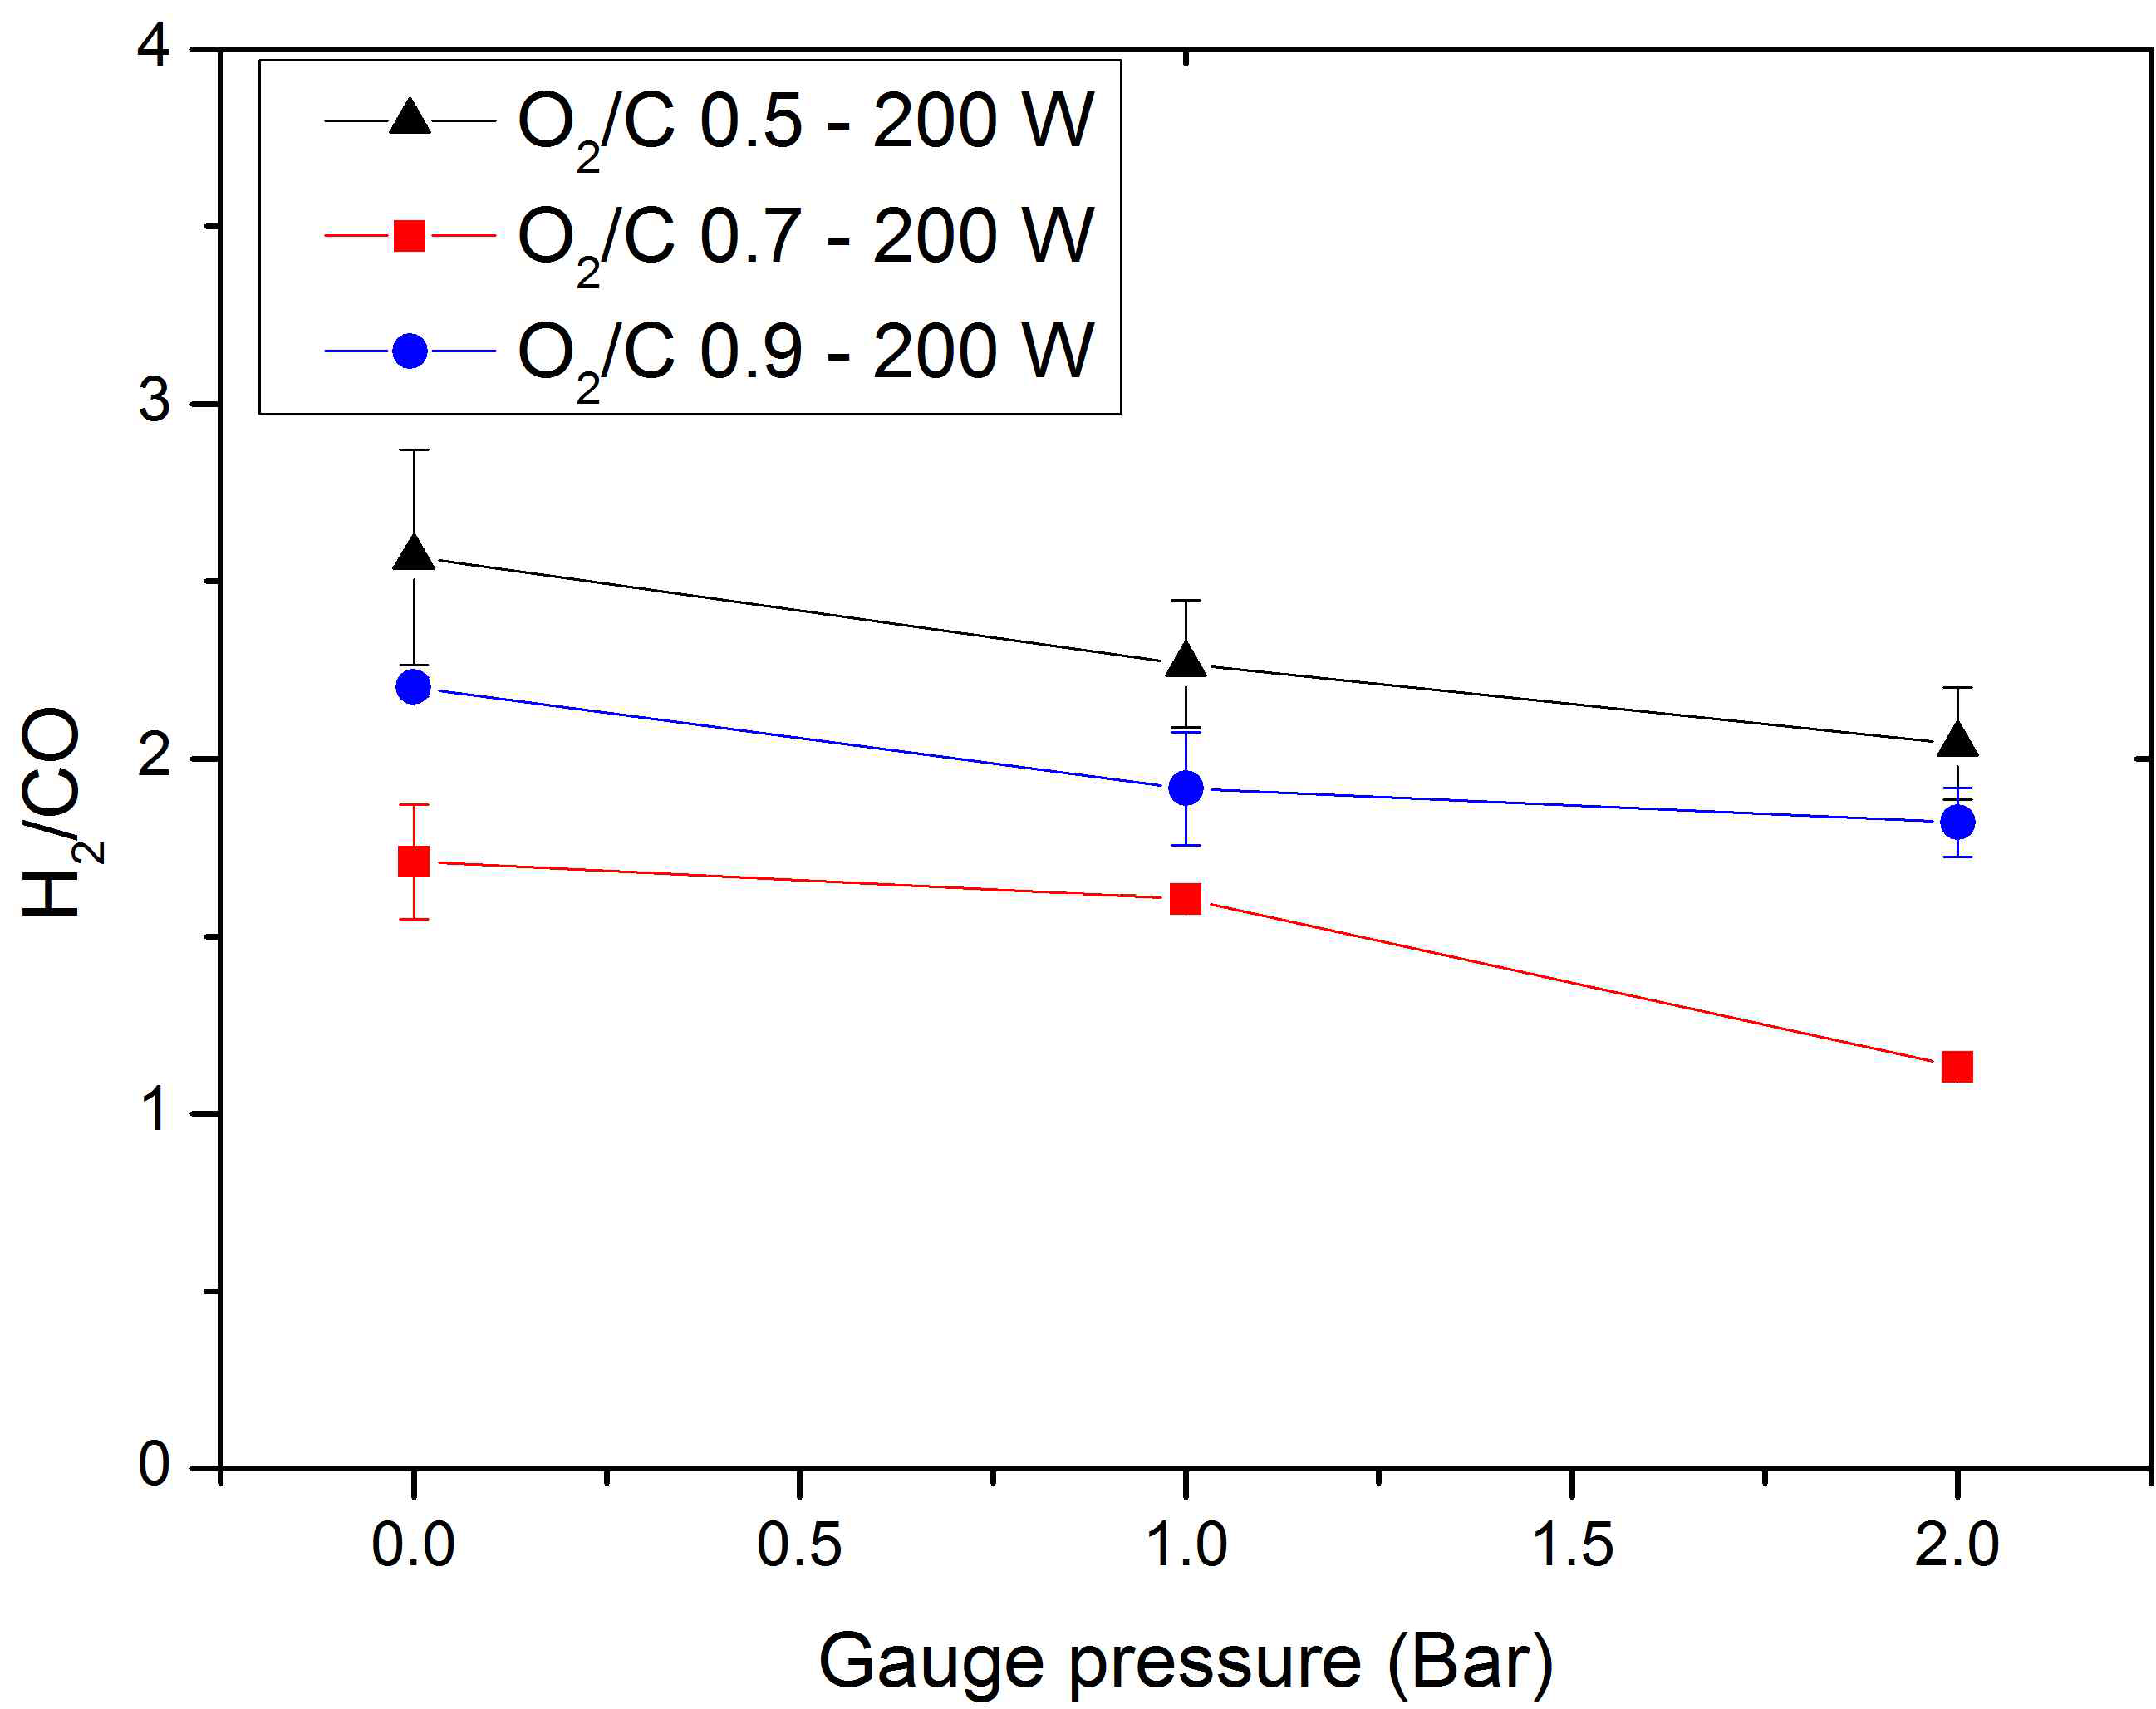 H2/CO at various gauge pressure, input power = 200 W